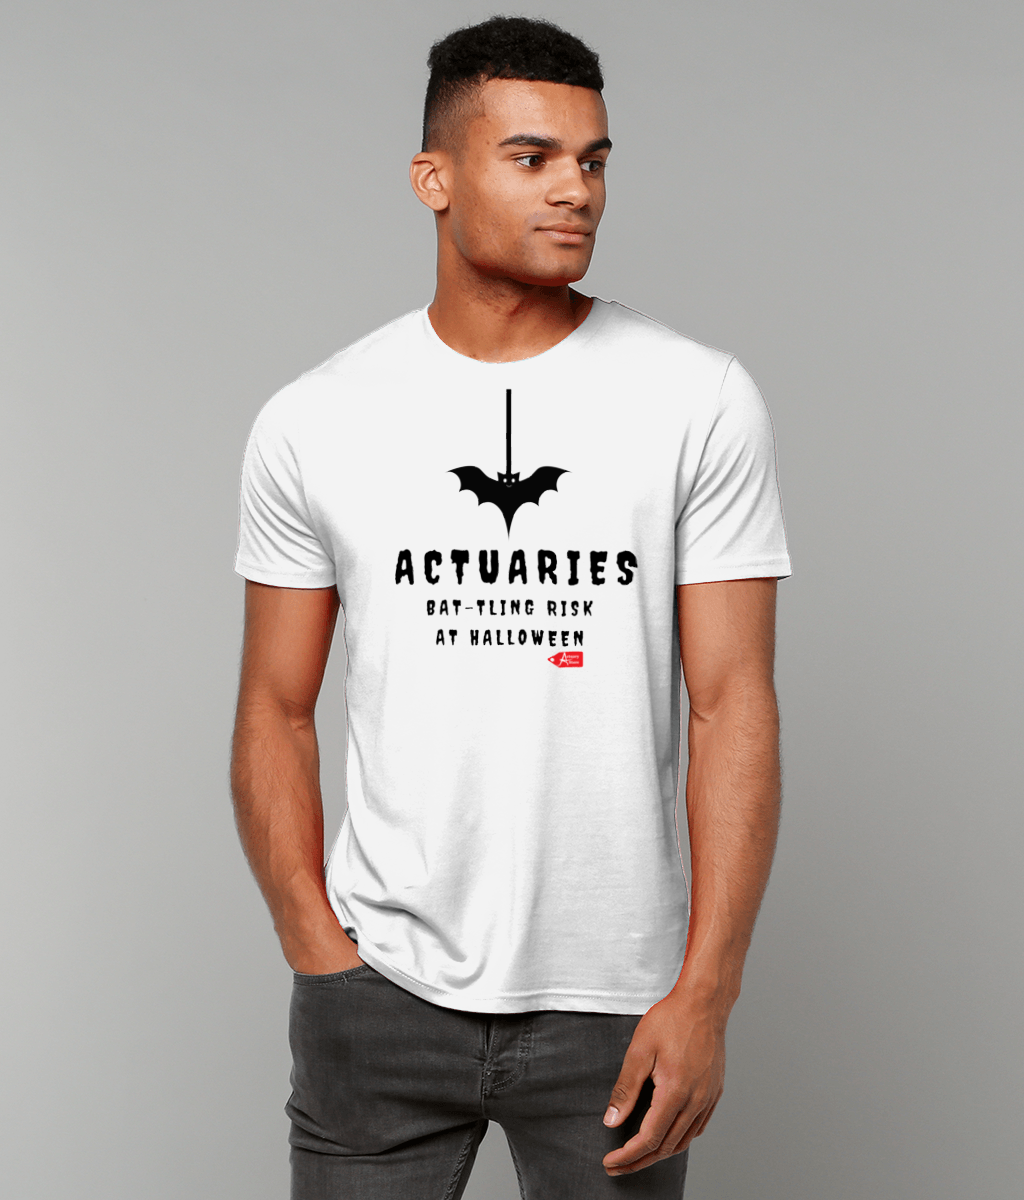 Actuaries Bat-tling Risk At Halloween T-Shirt